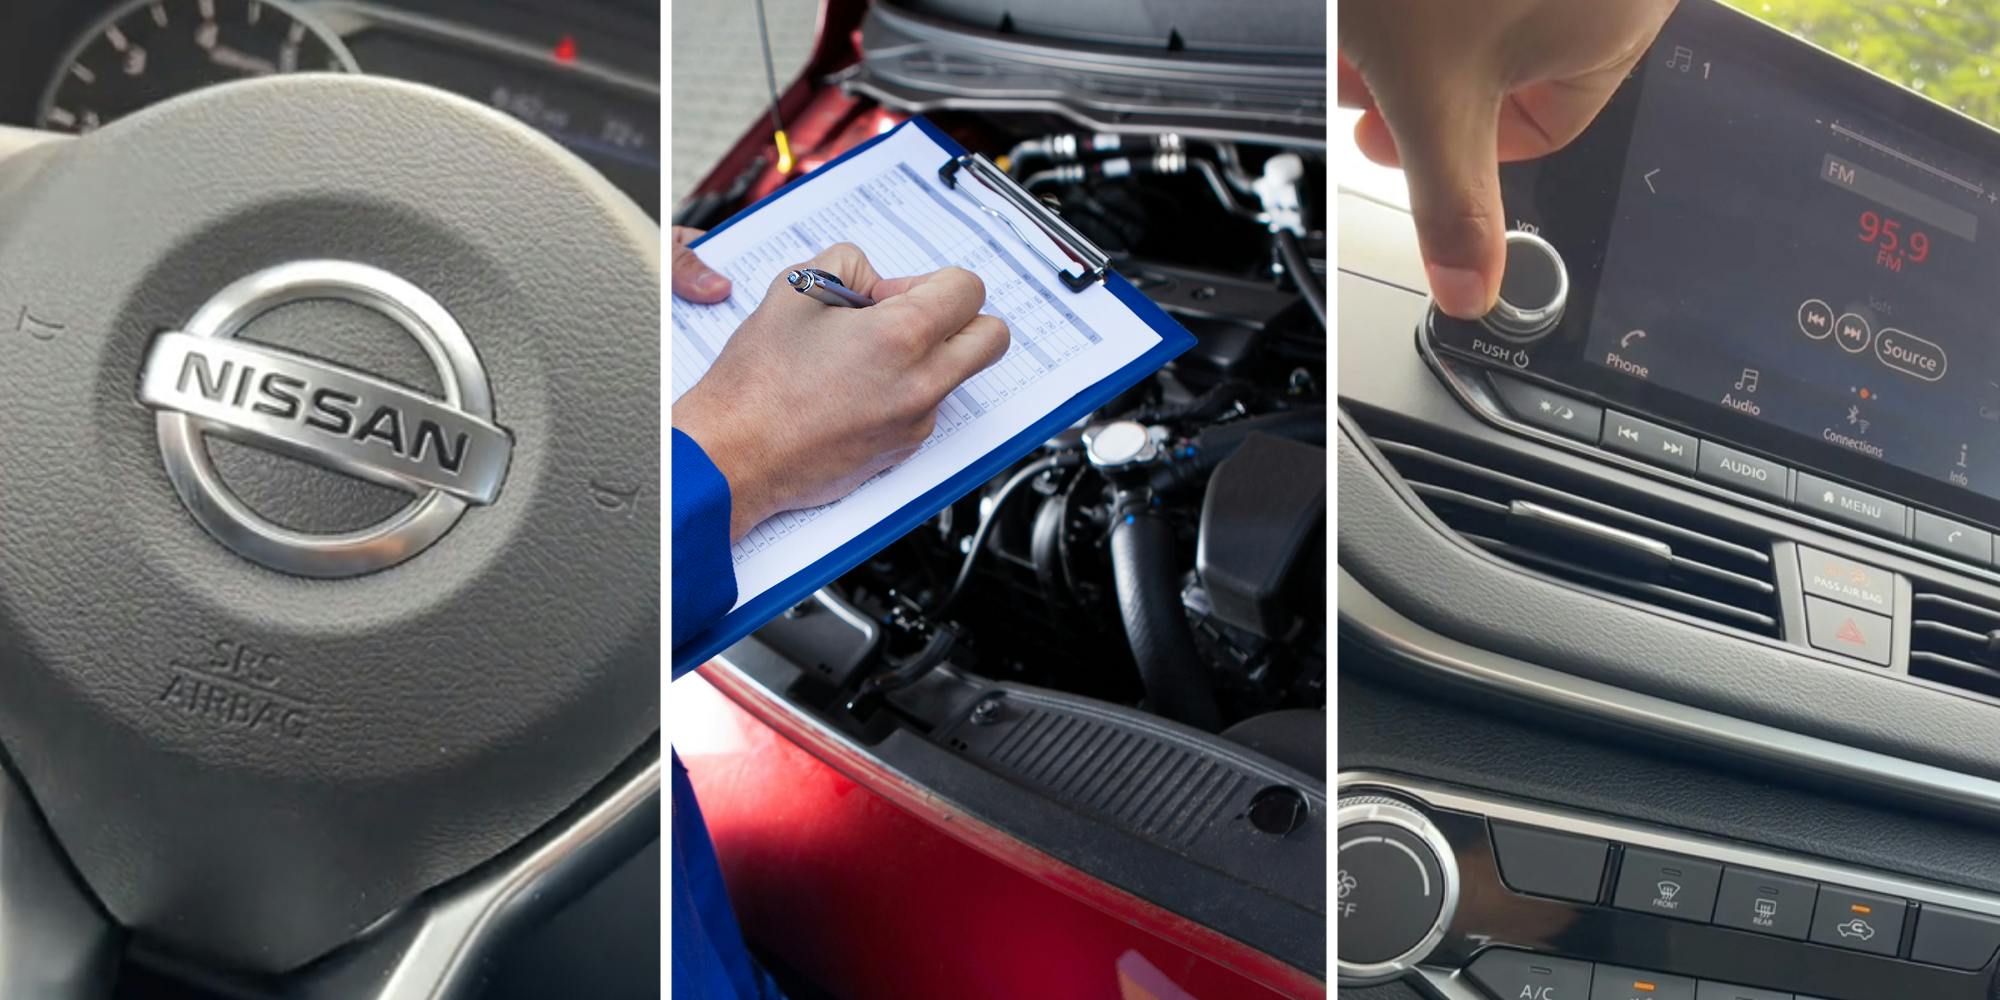 Nissan steering wheel(l), Mechanic checking engine(c), Hand on radio tuner in car(r)